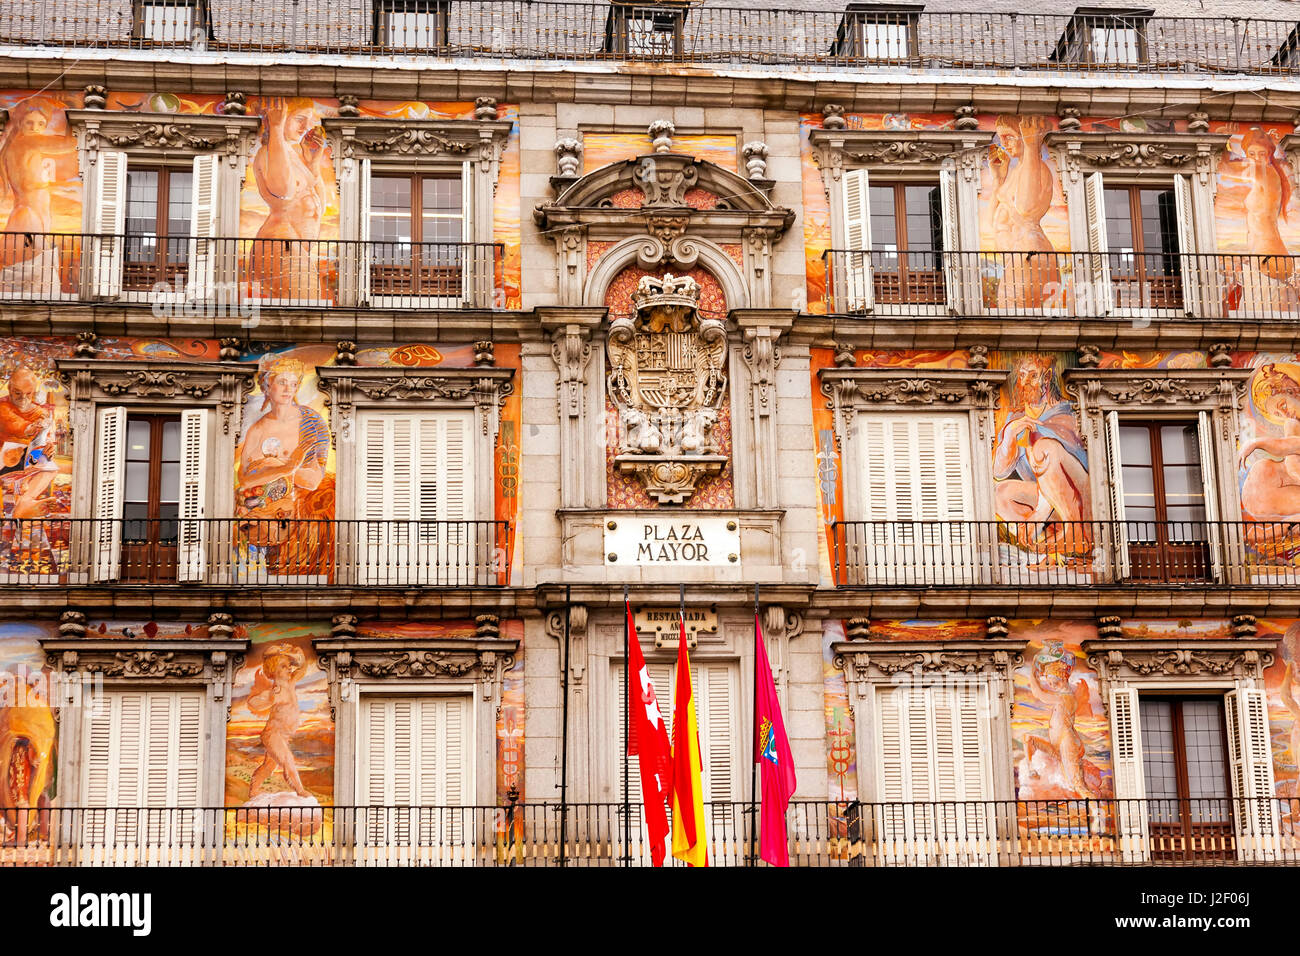 Plaza Mayor, built in the 1617, Madrid, Spain. Stock Photo